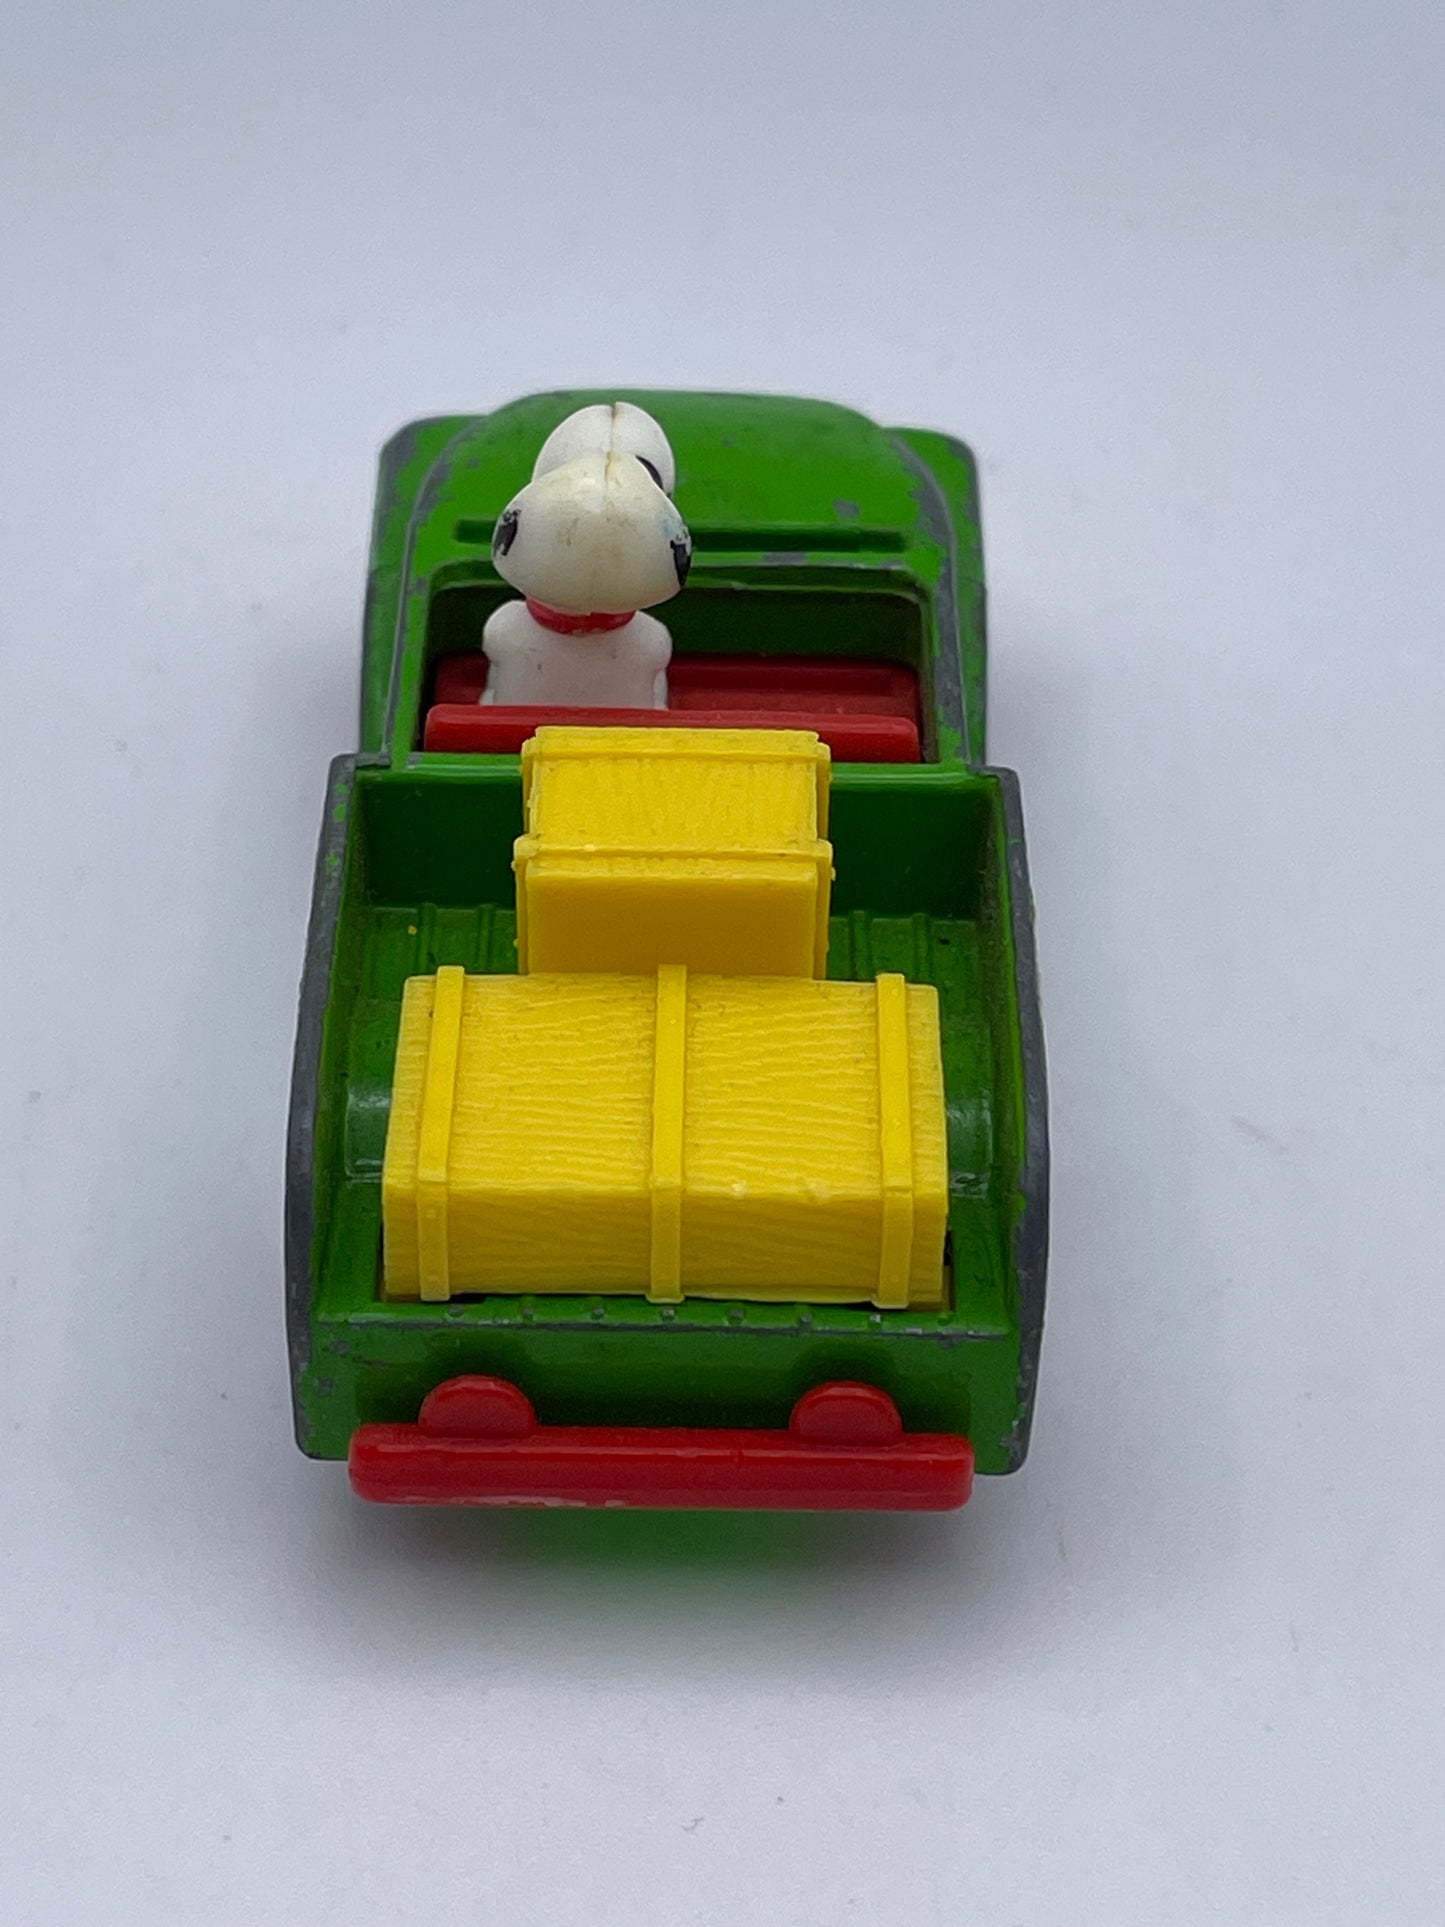 Snoopy Diecast Car 1966 #103012